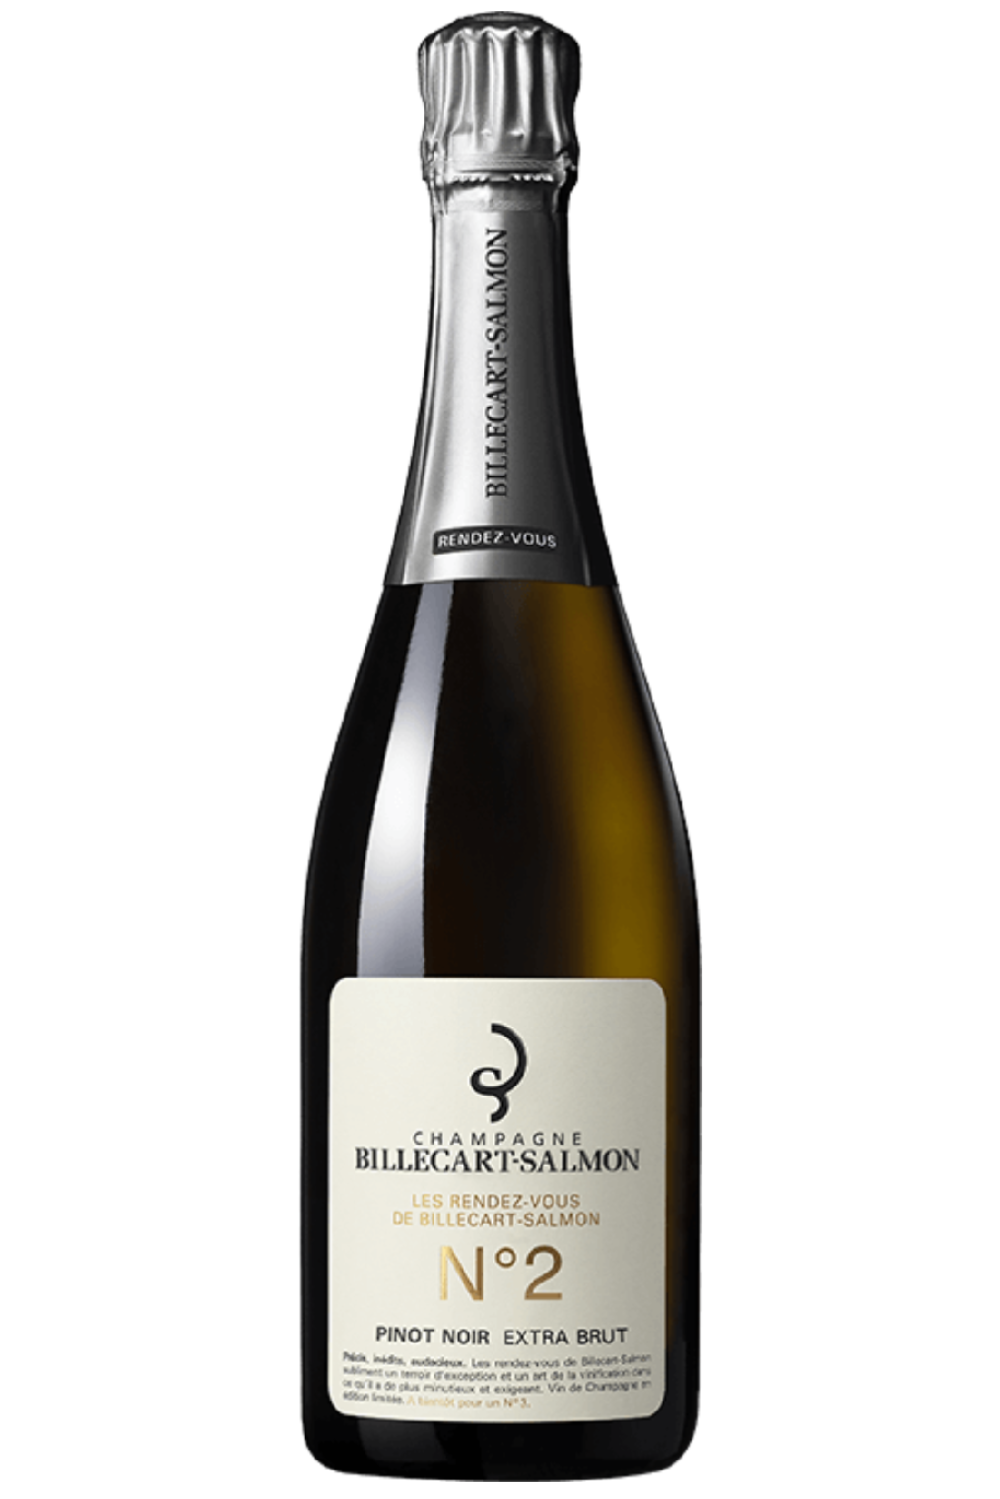 WineVins Billecart-Salmon RDV Nº2 Pinot Noir Extra Brut